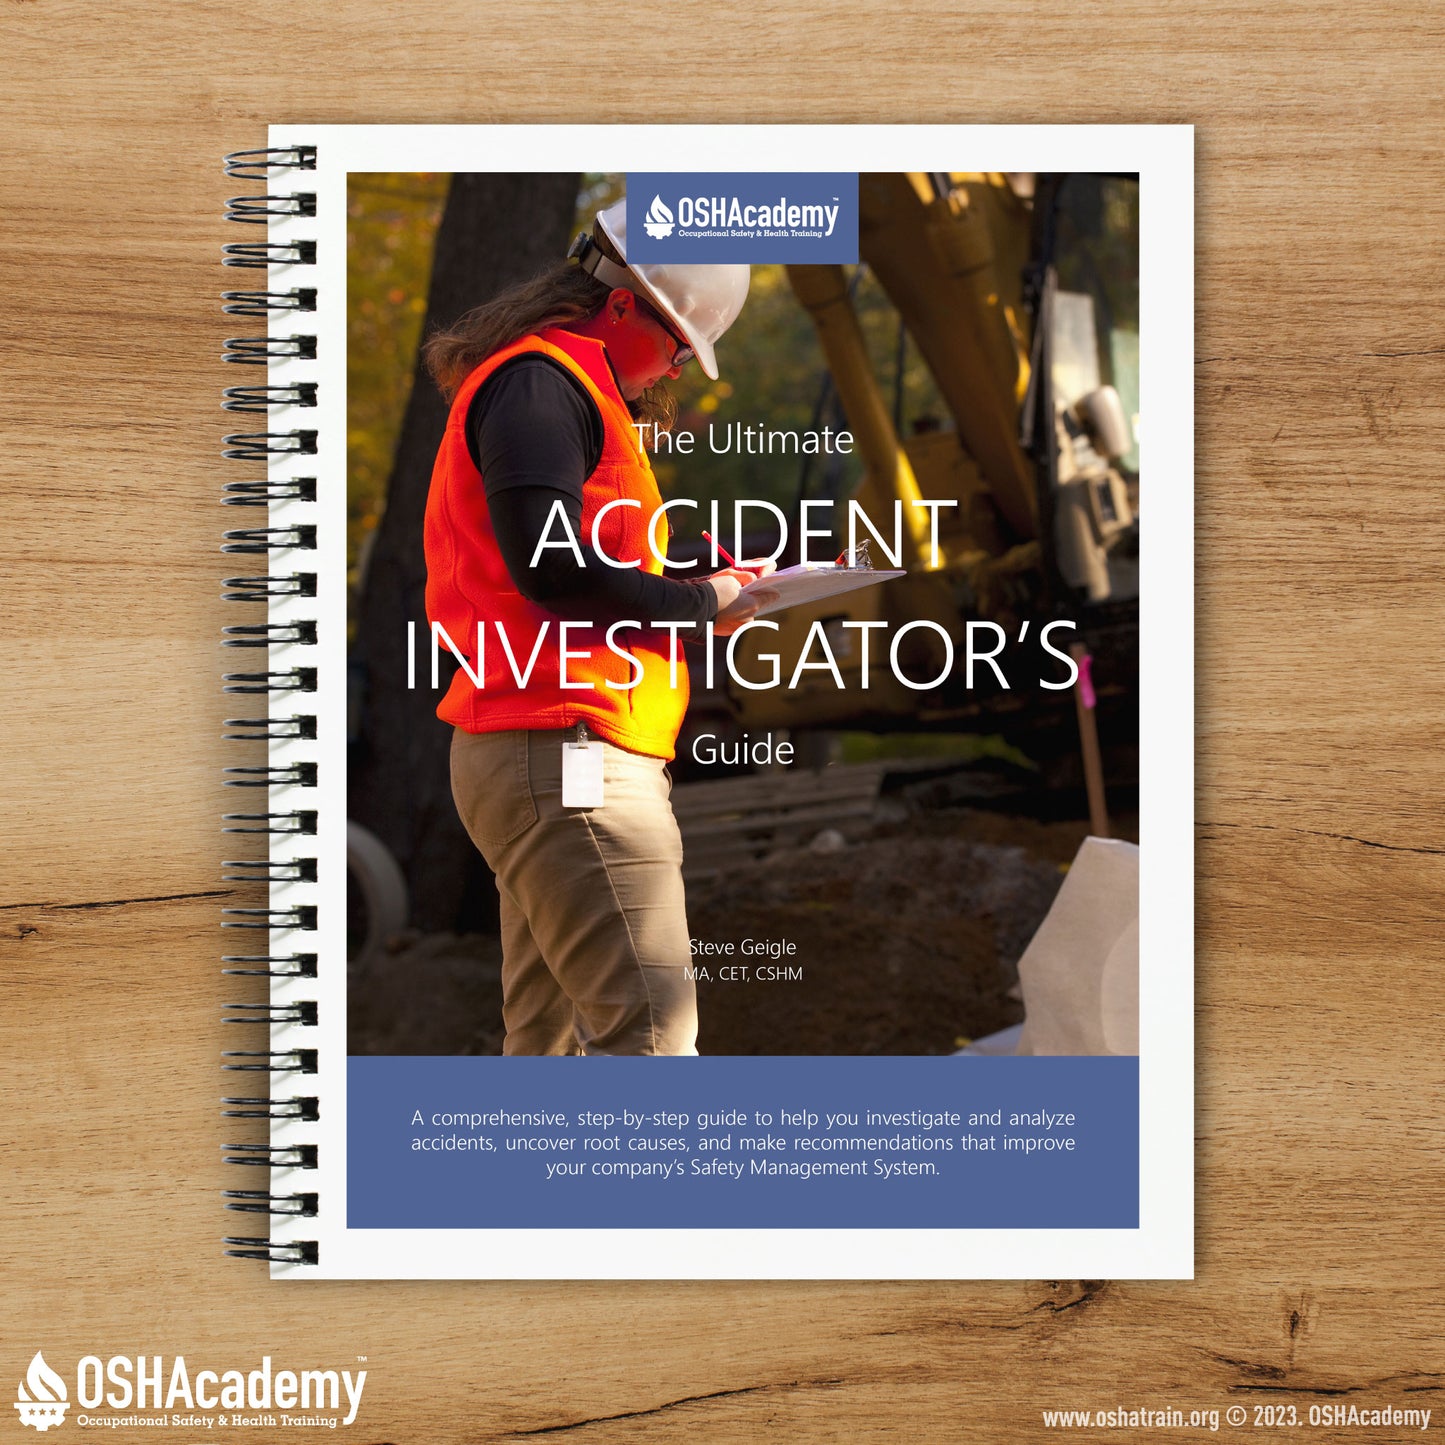 The Ultimate Accident Investigator's Guide